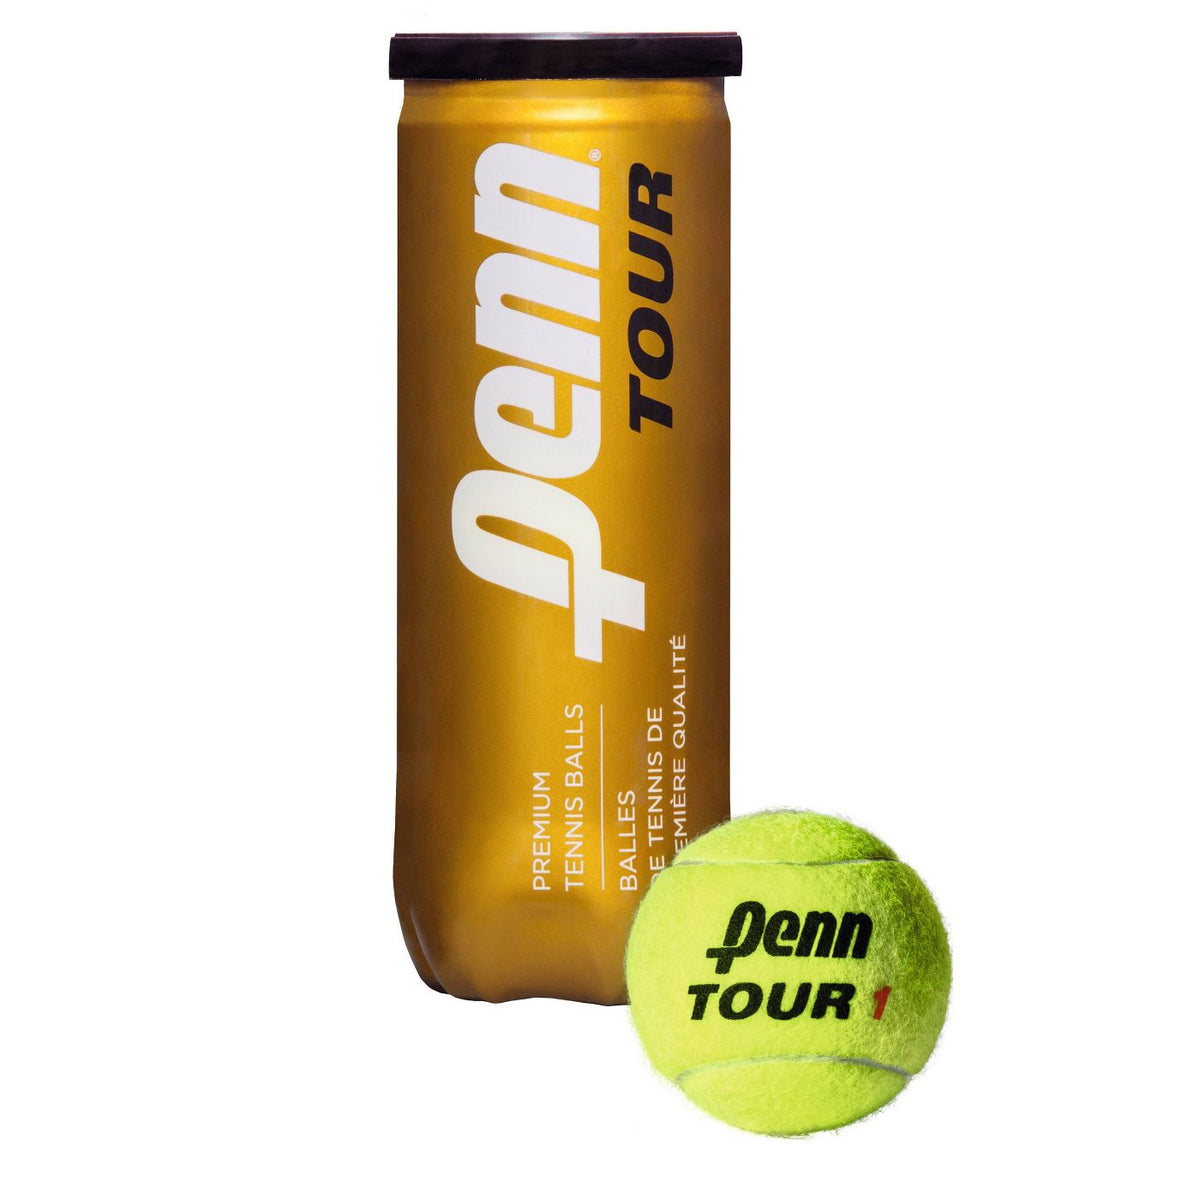 Penn | 521061 | Tour de pelotas de tenis premium